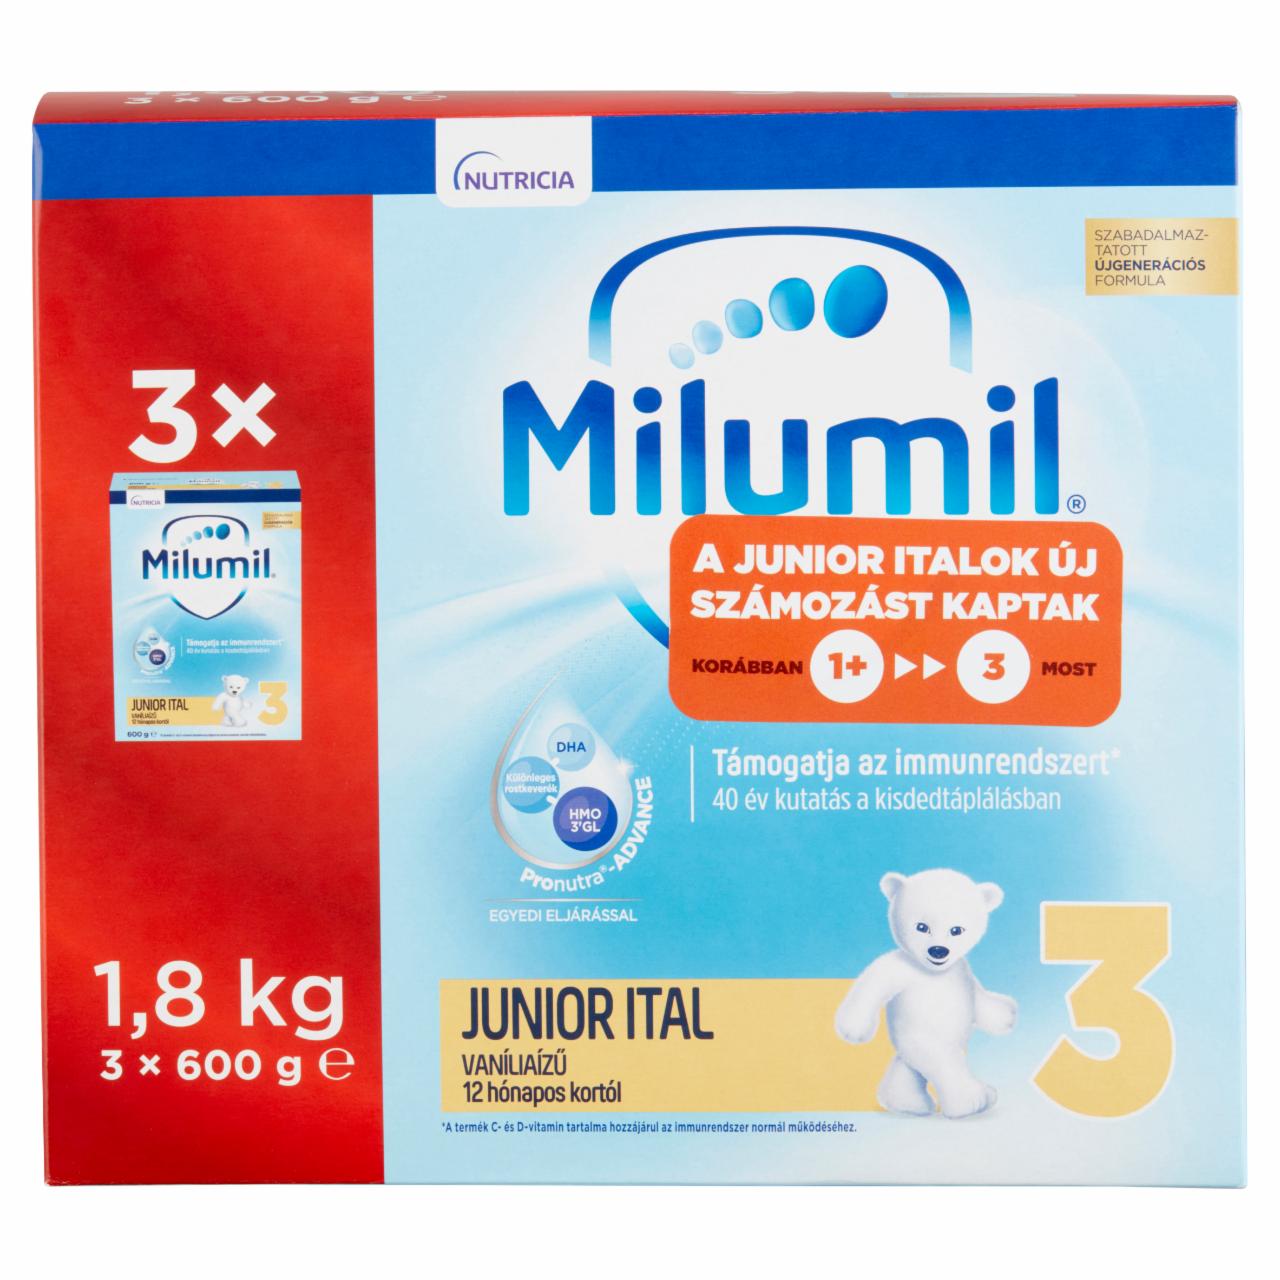 Képek - Milumil 3 Vaníliaízű Junior ital 12 hónapos kortól 3 x 600 g (1,8 kg)